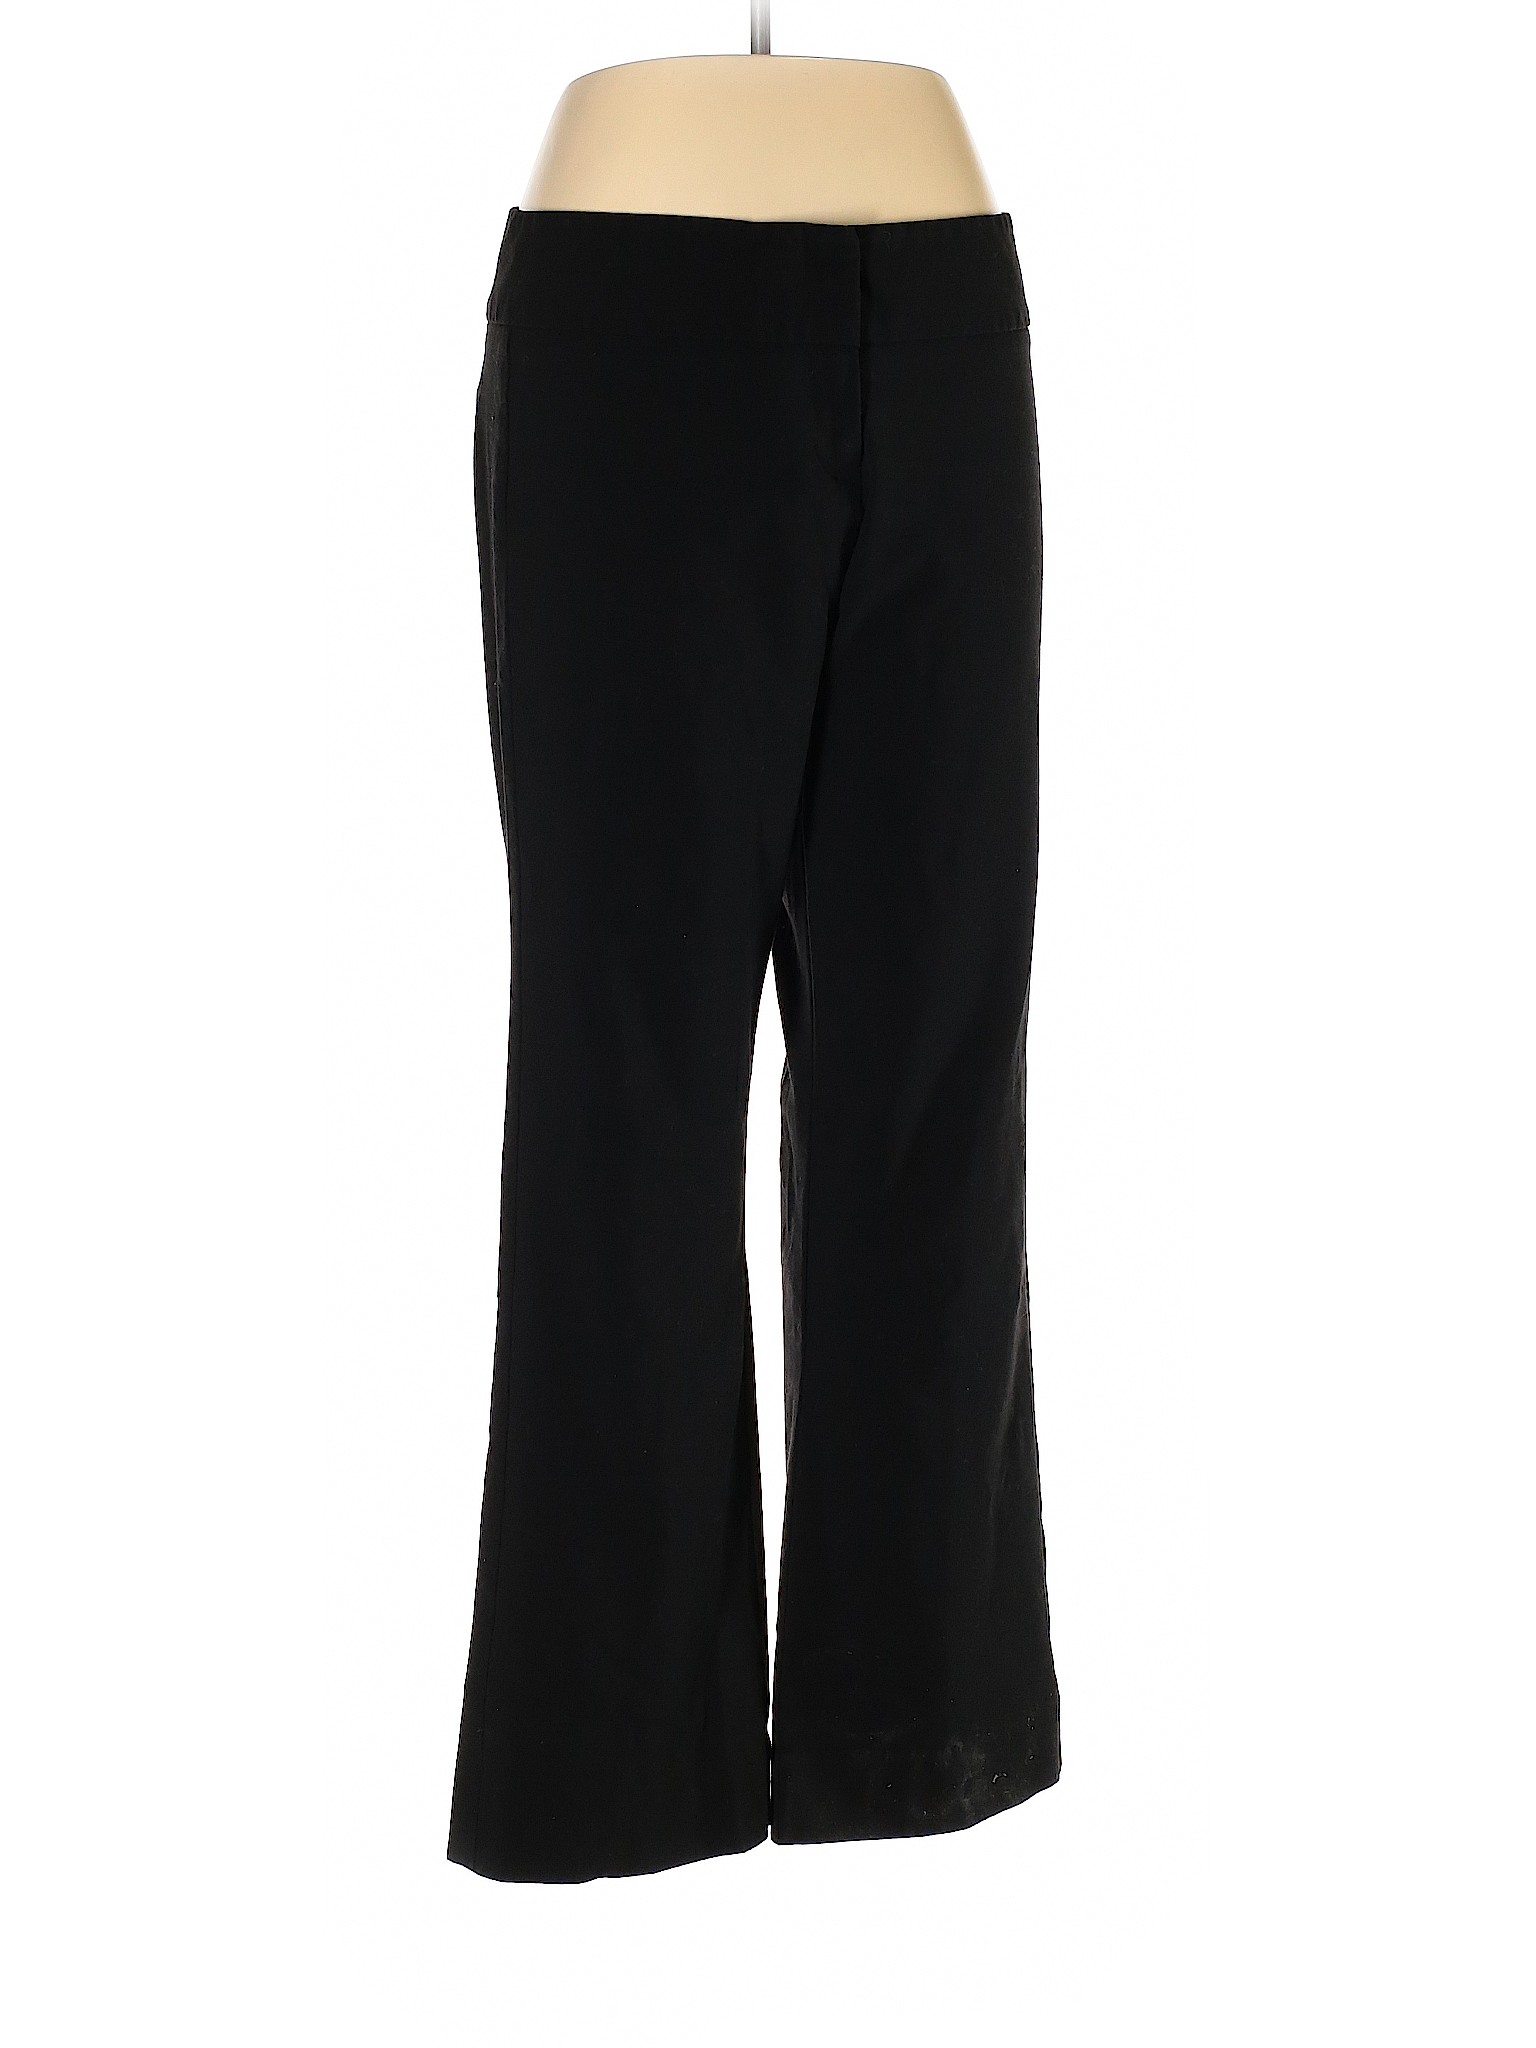 Kenneth Cole New York Women Black Dress Pants 10 | eBay